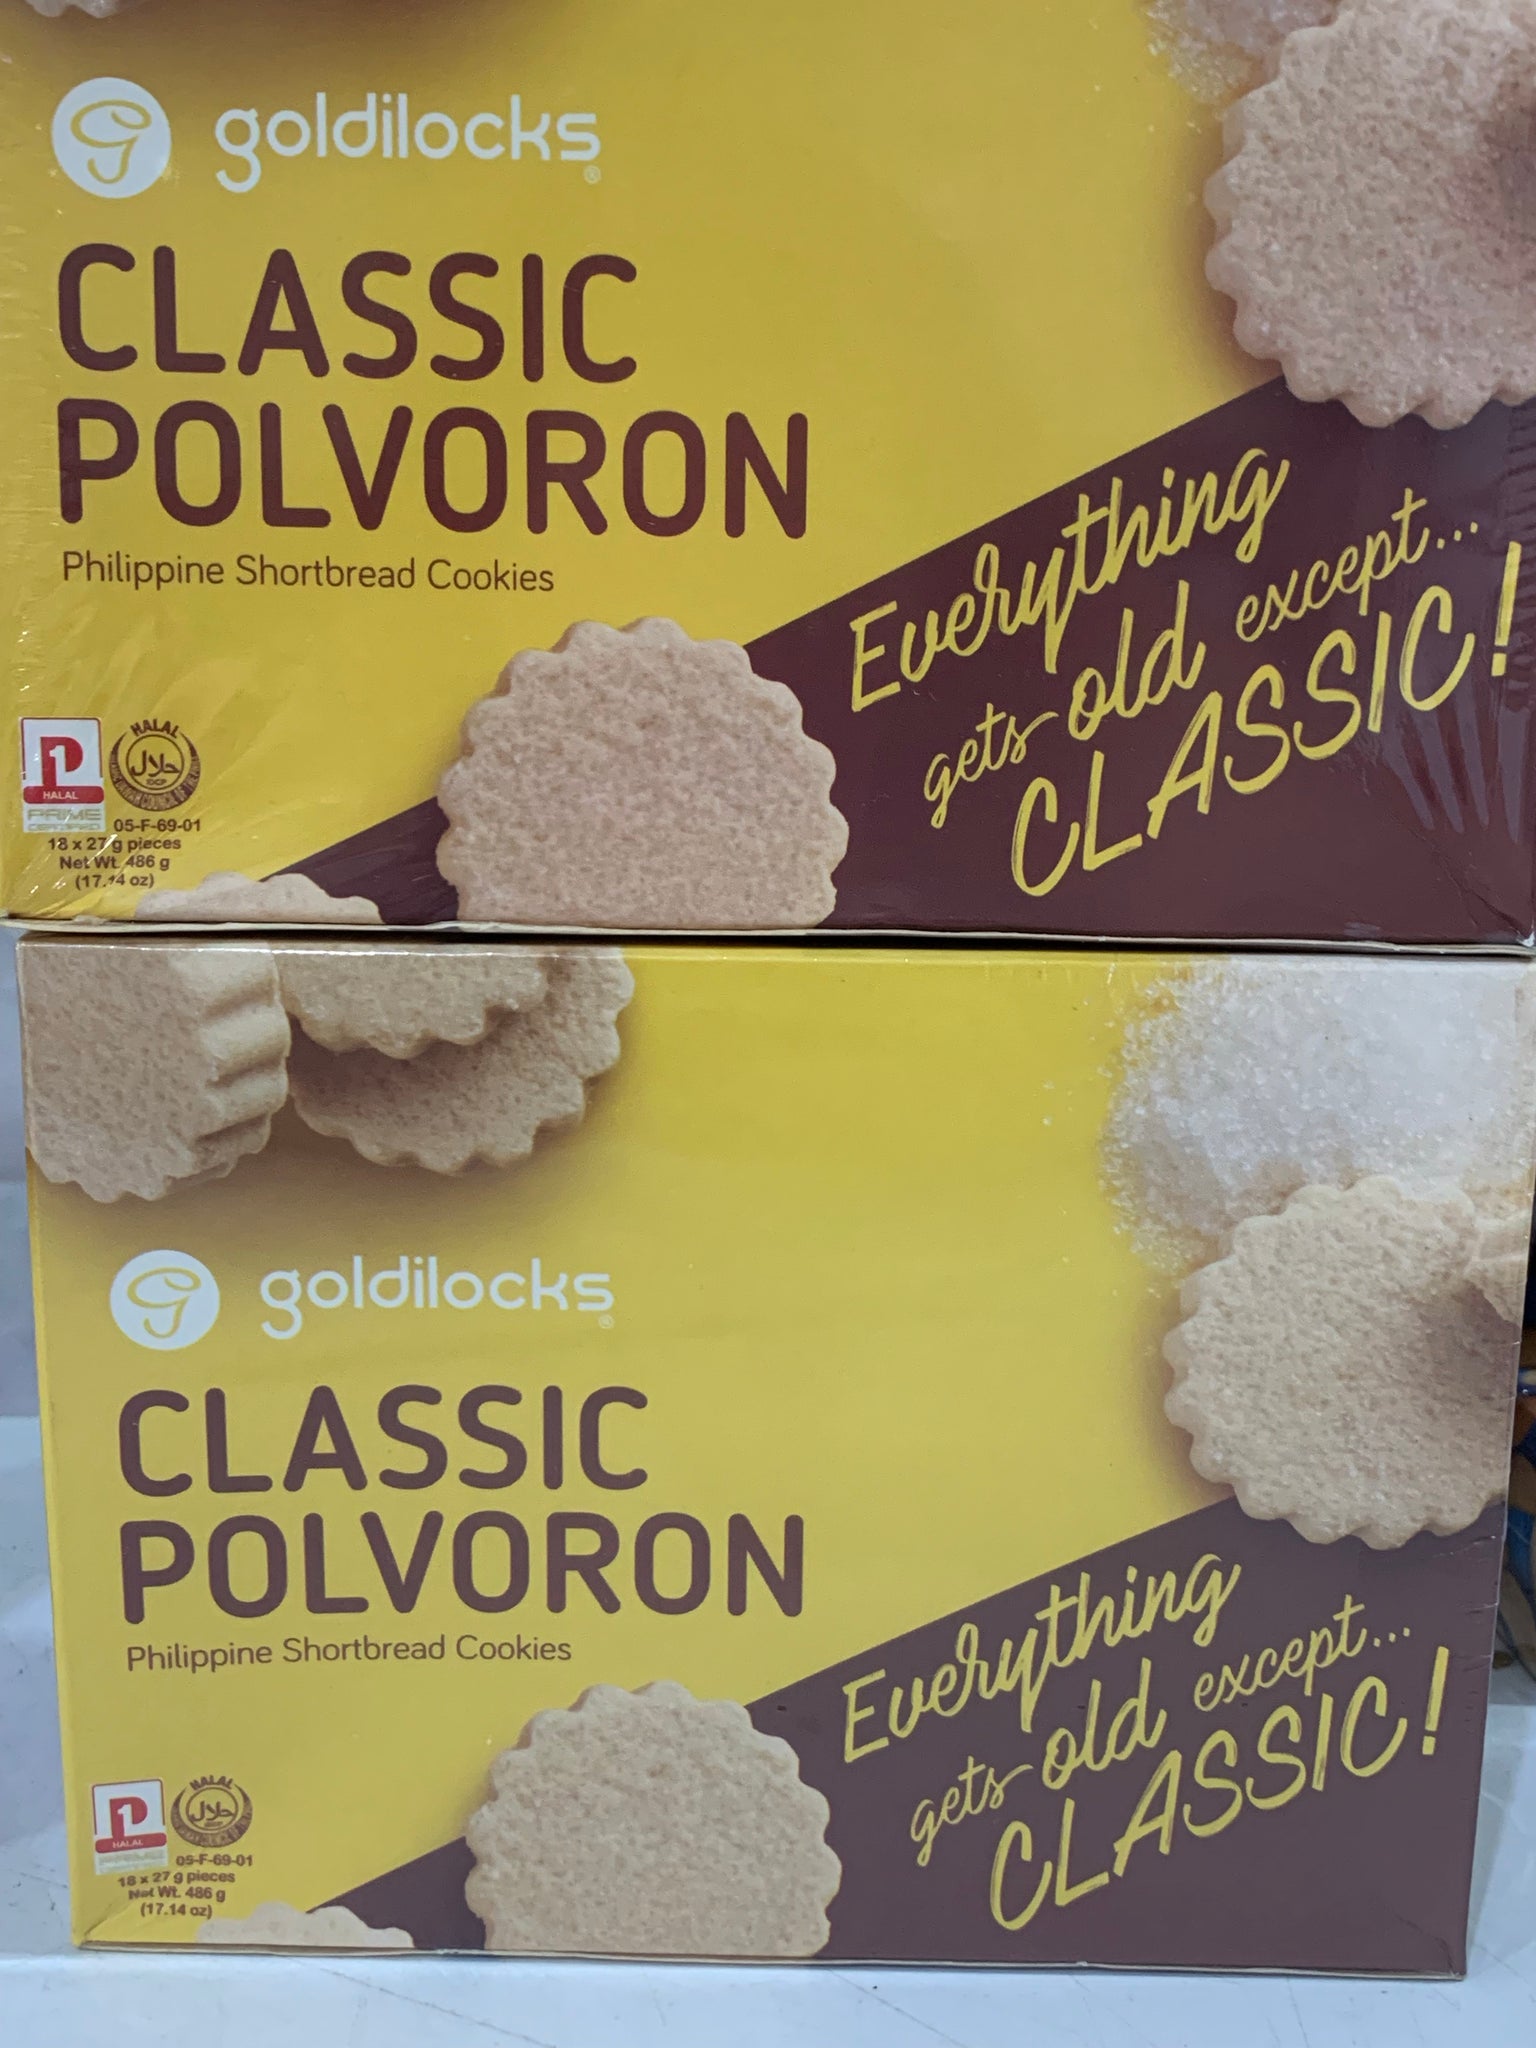 Goldilocks Classic Polvoron in Big Box